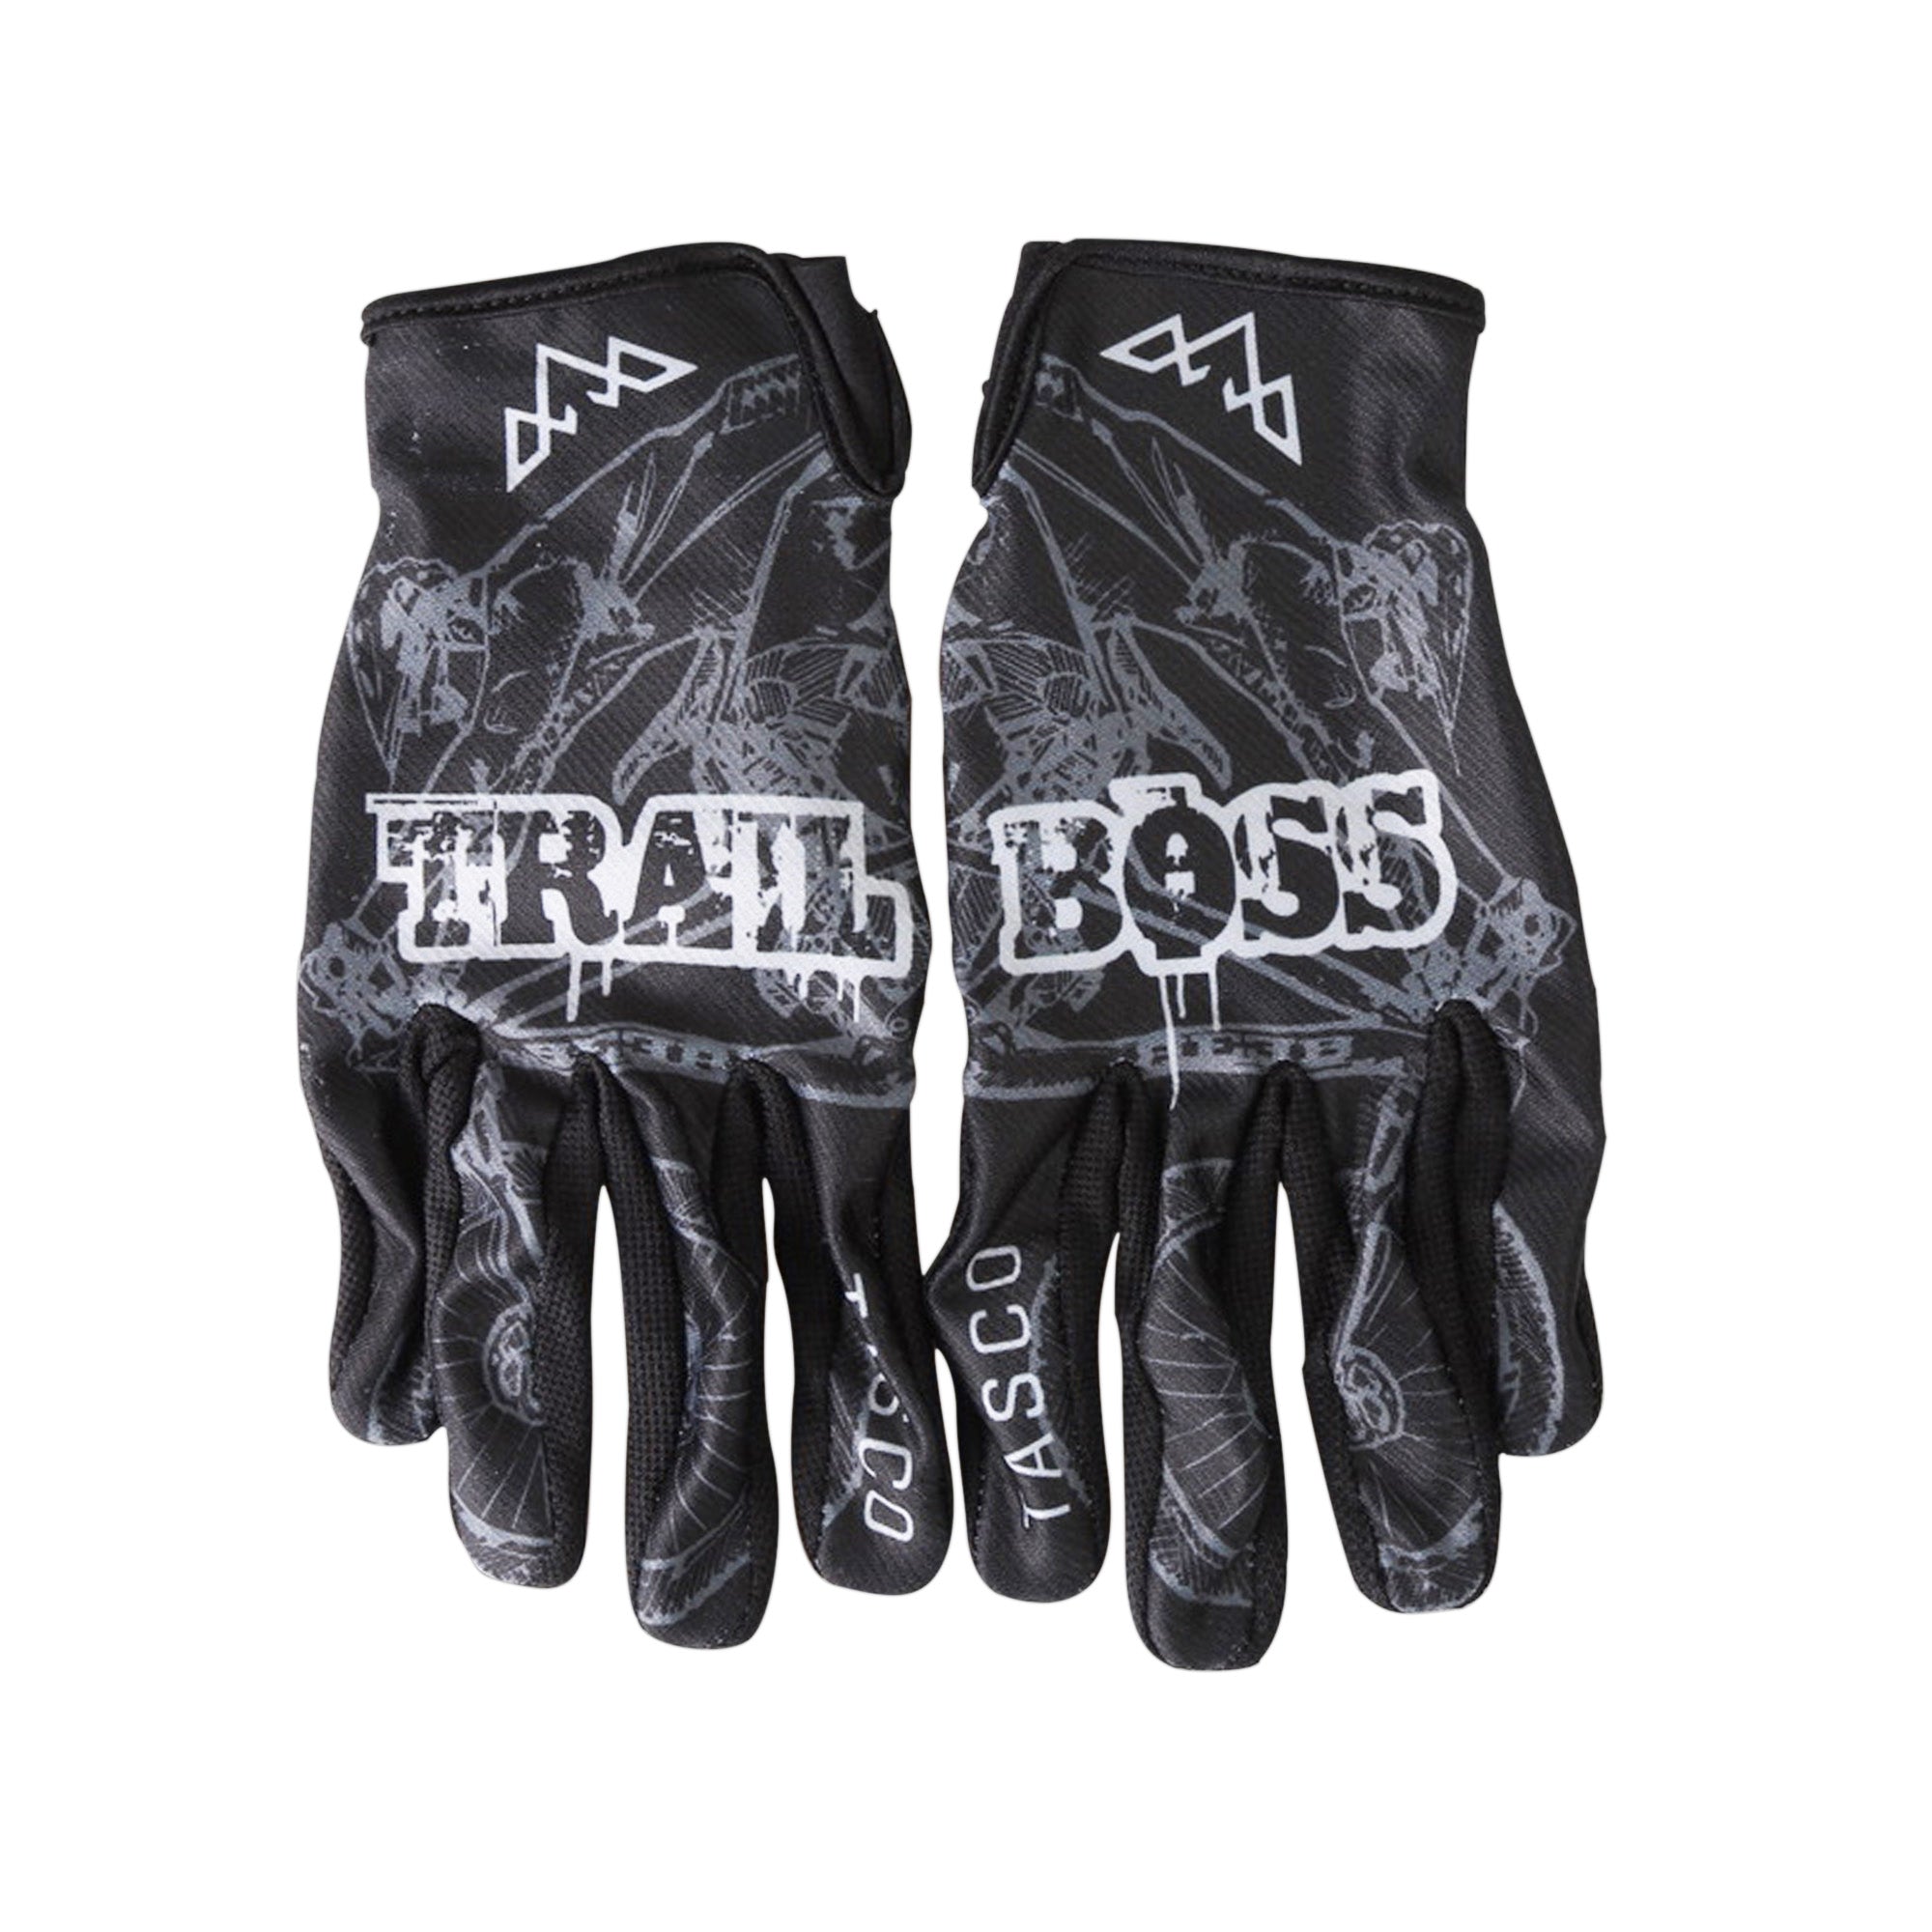 Ridgeline Gloves - Trail Boss